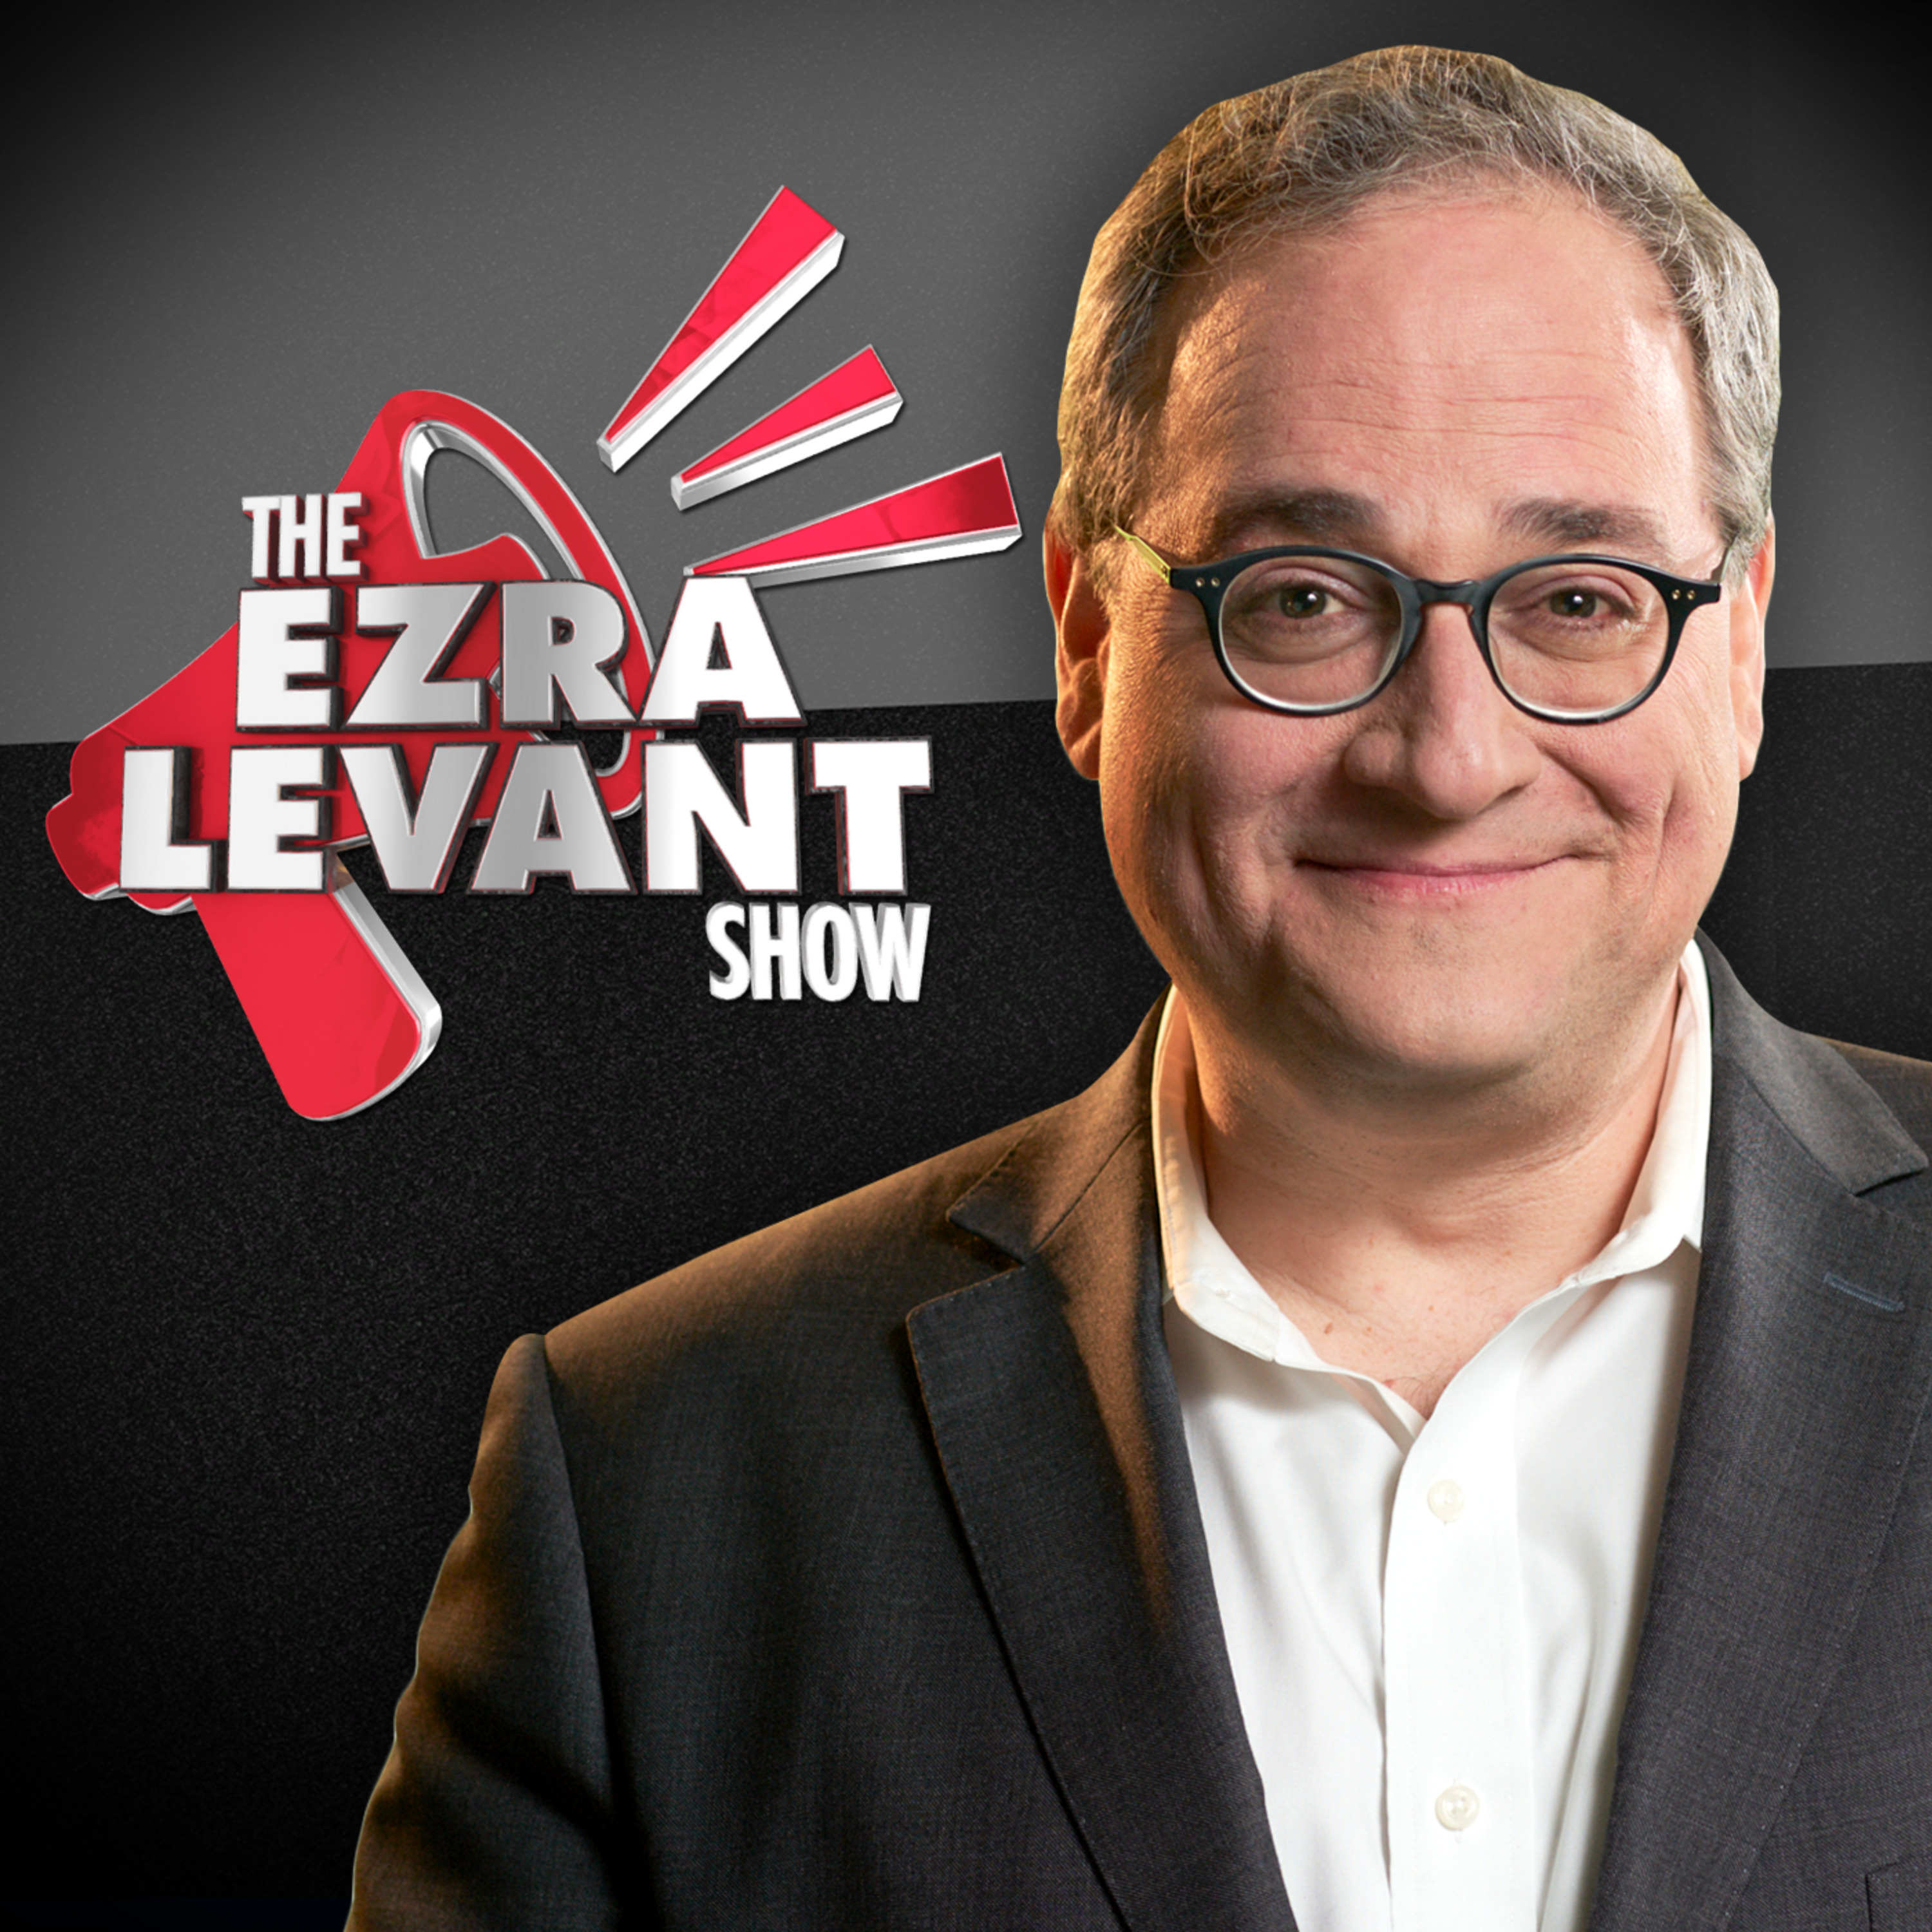 EZRA LEVANT | Extended interview with Alberta premier Danielle Smith